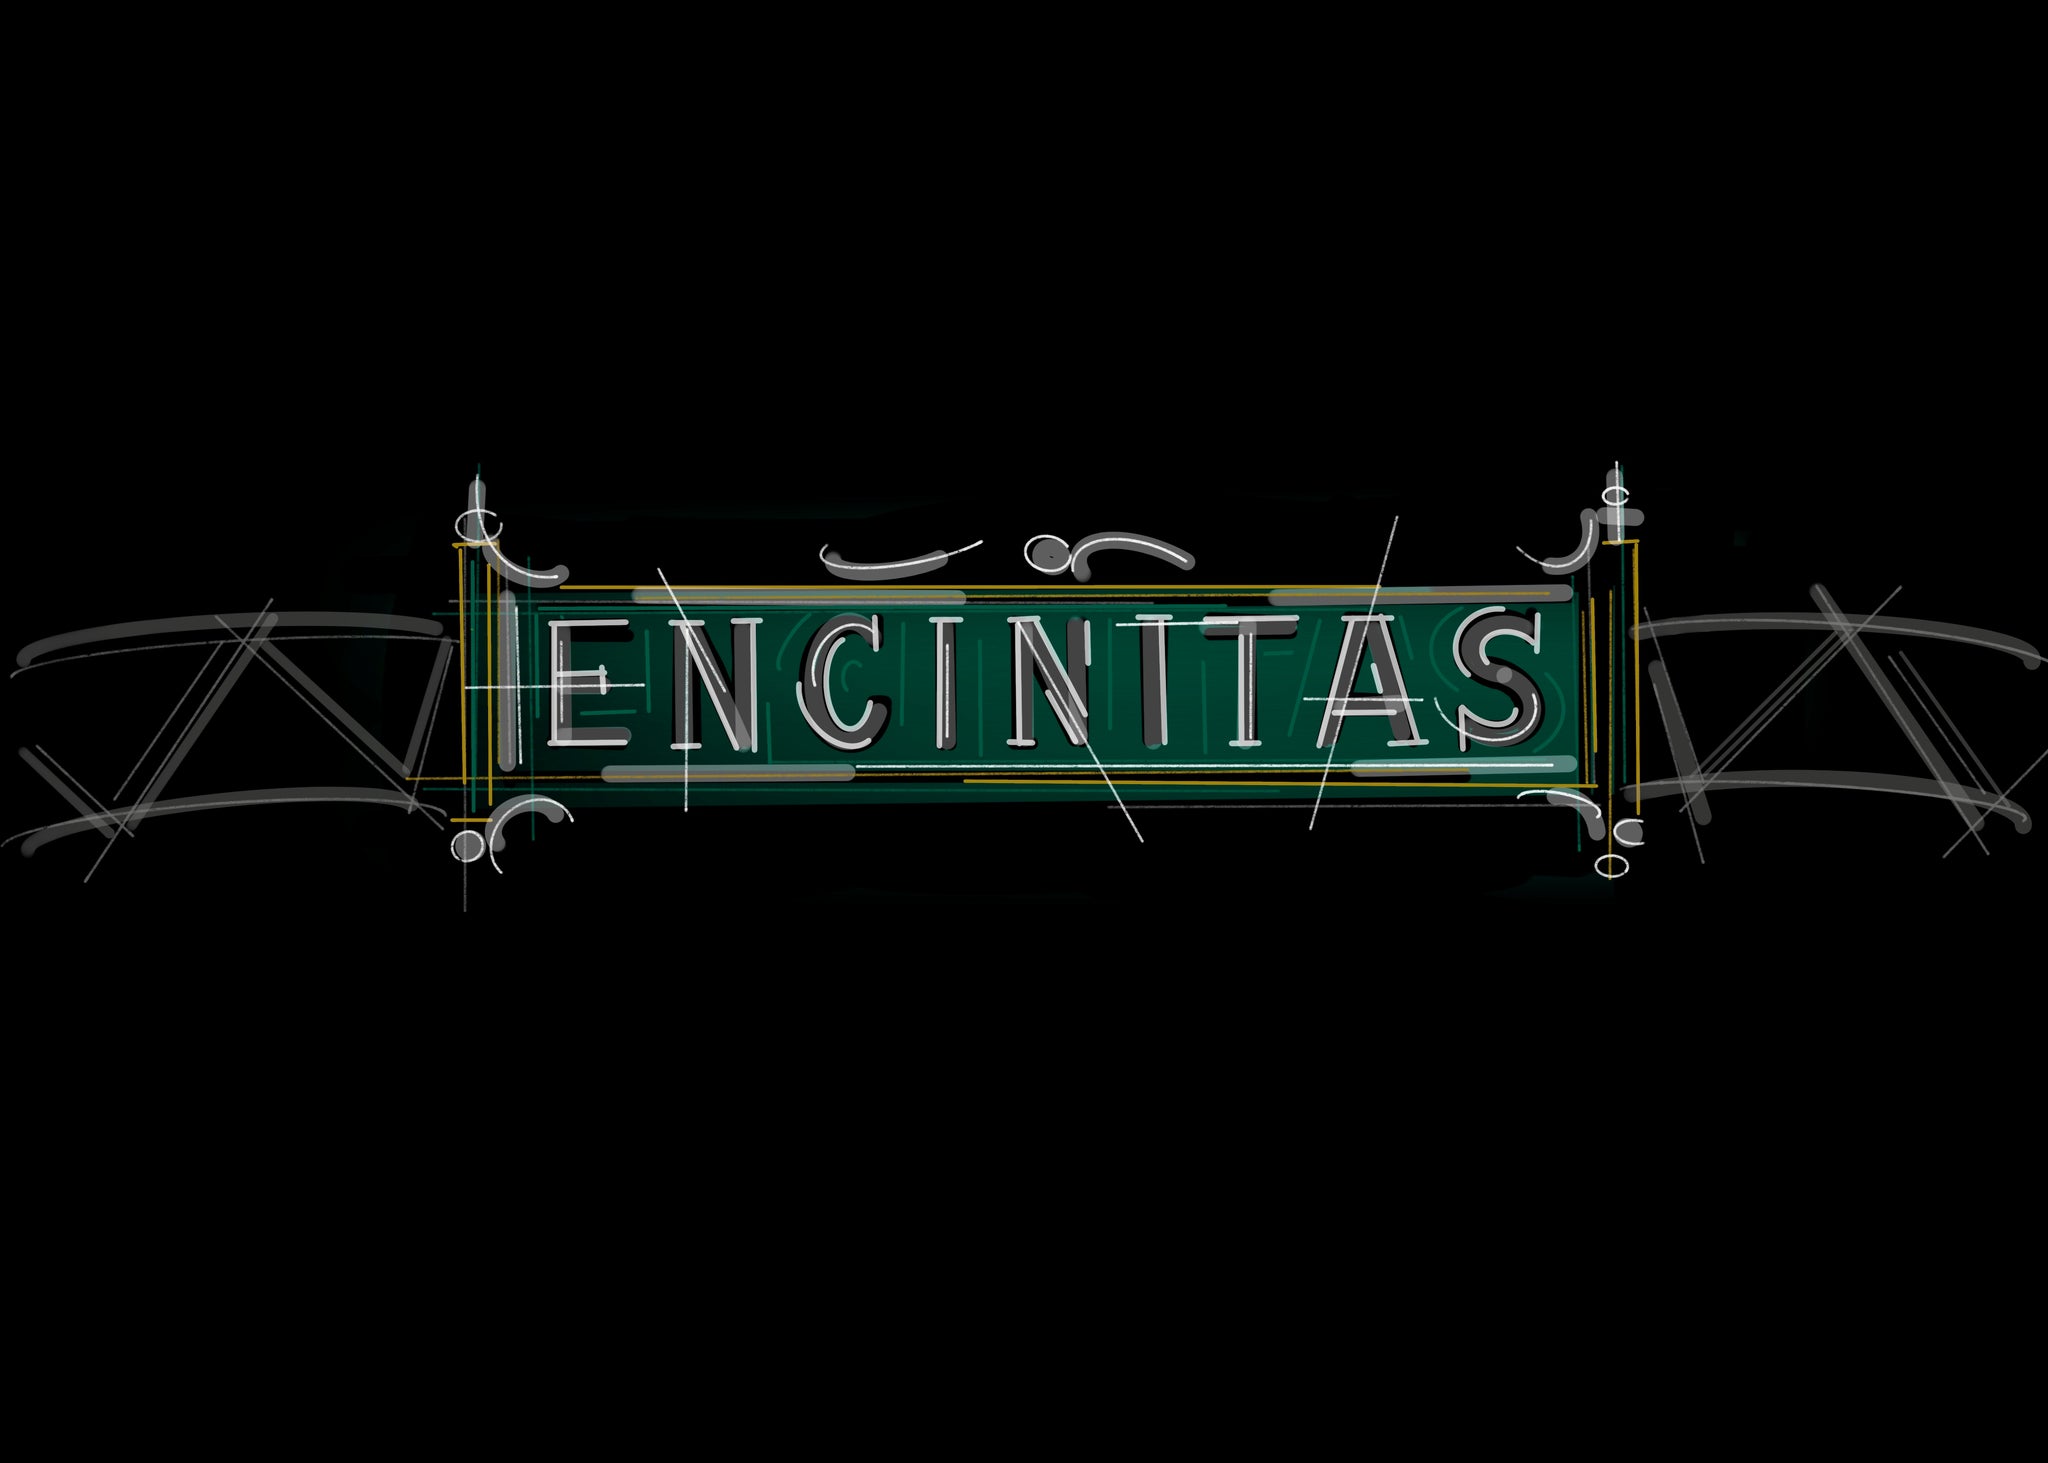 Encinitas Street Sign | T-shirt